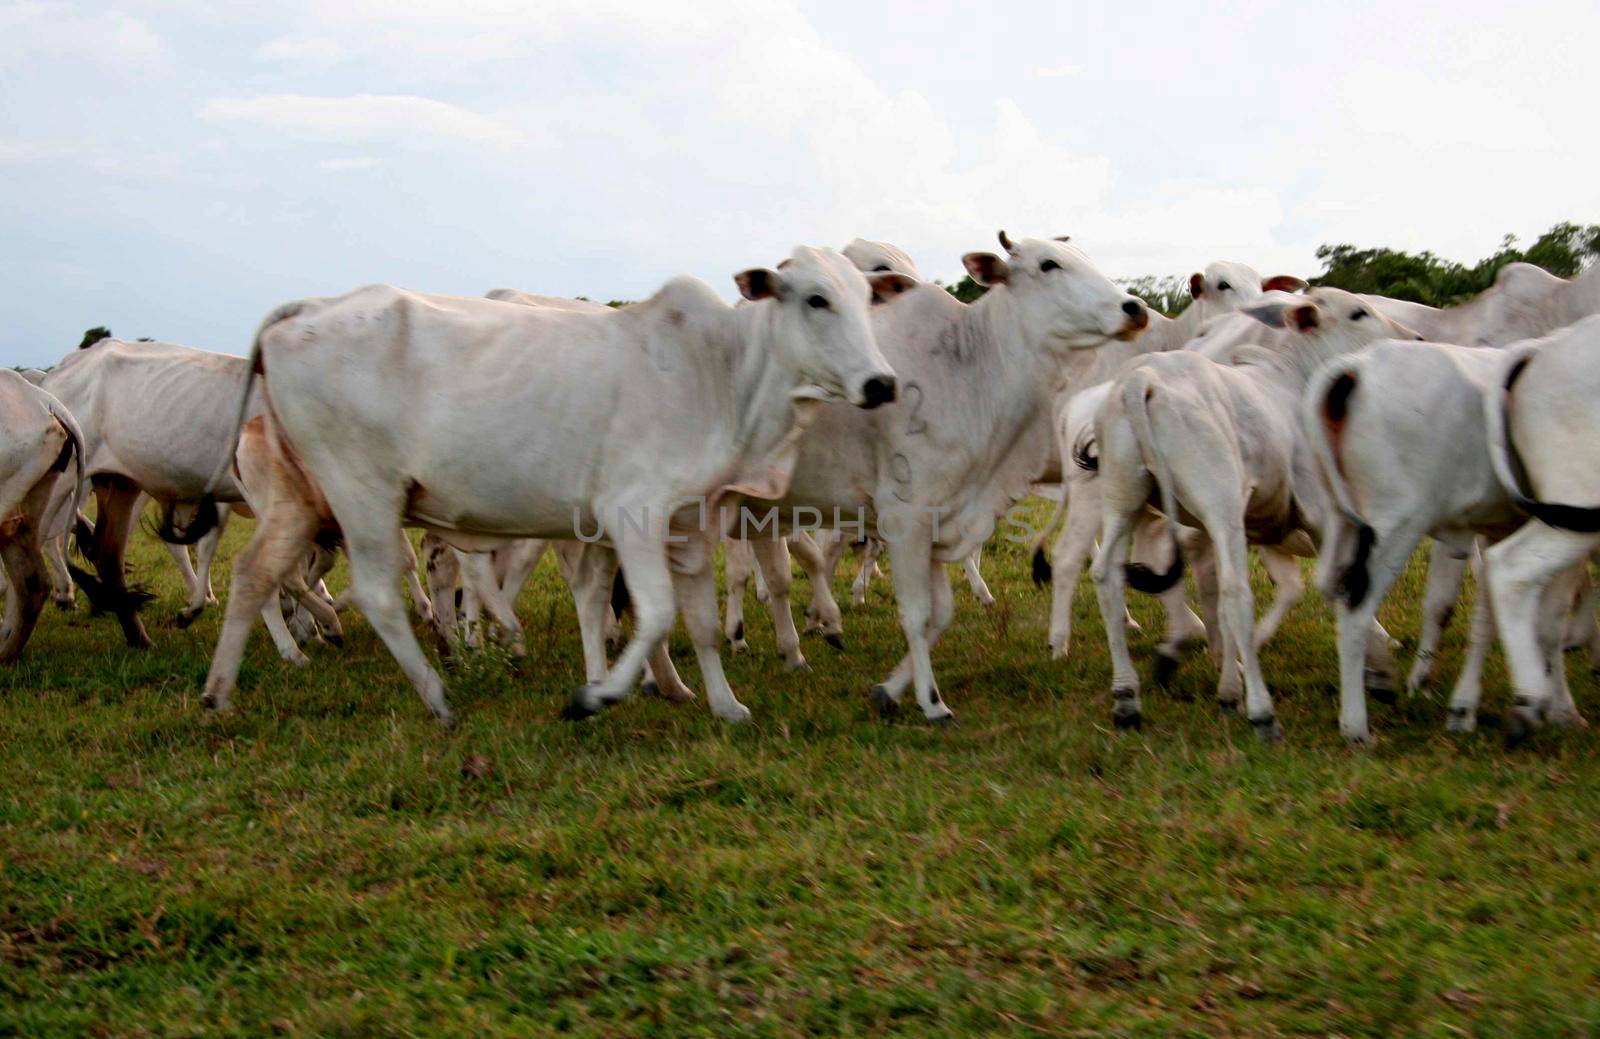 conde, bahia / brazil - april 5, 2008: Nellore cattle breeding is seen on a farm in the municipality of Conde.
